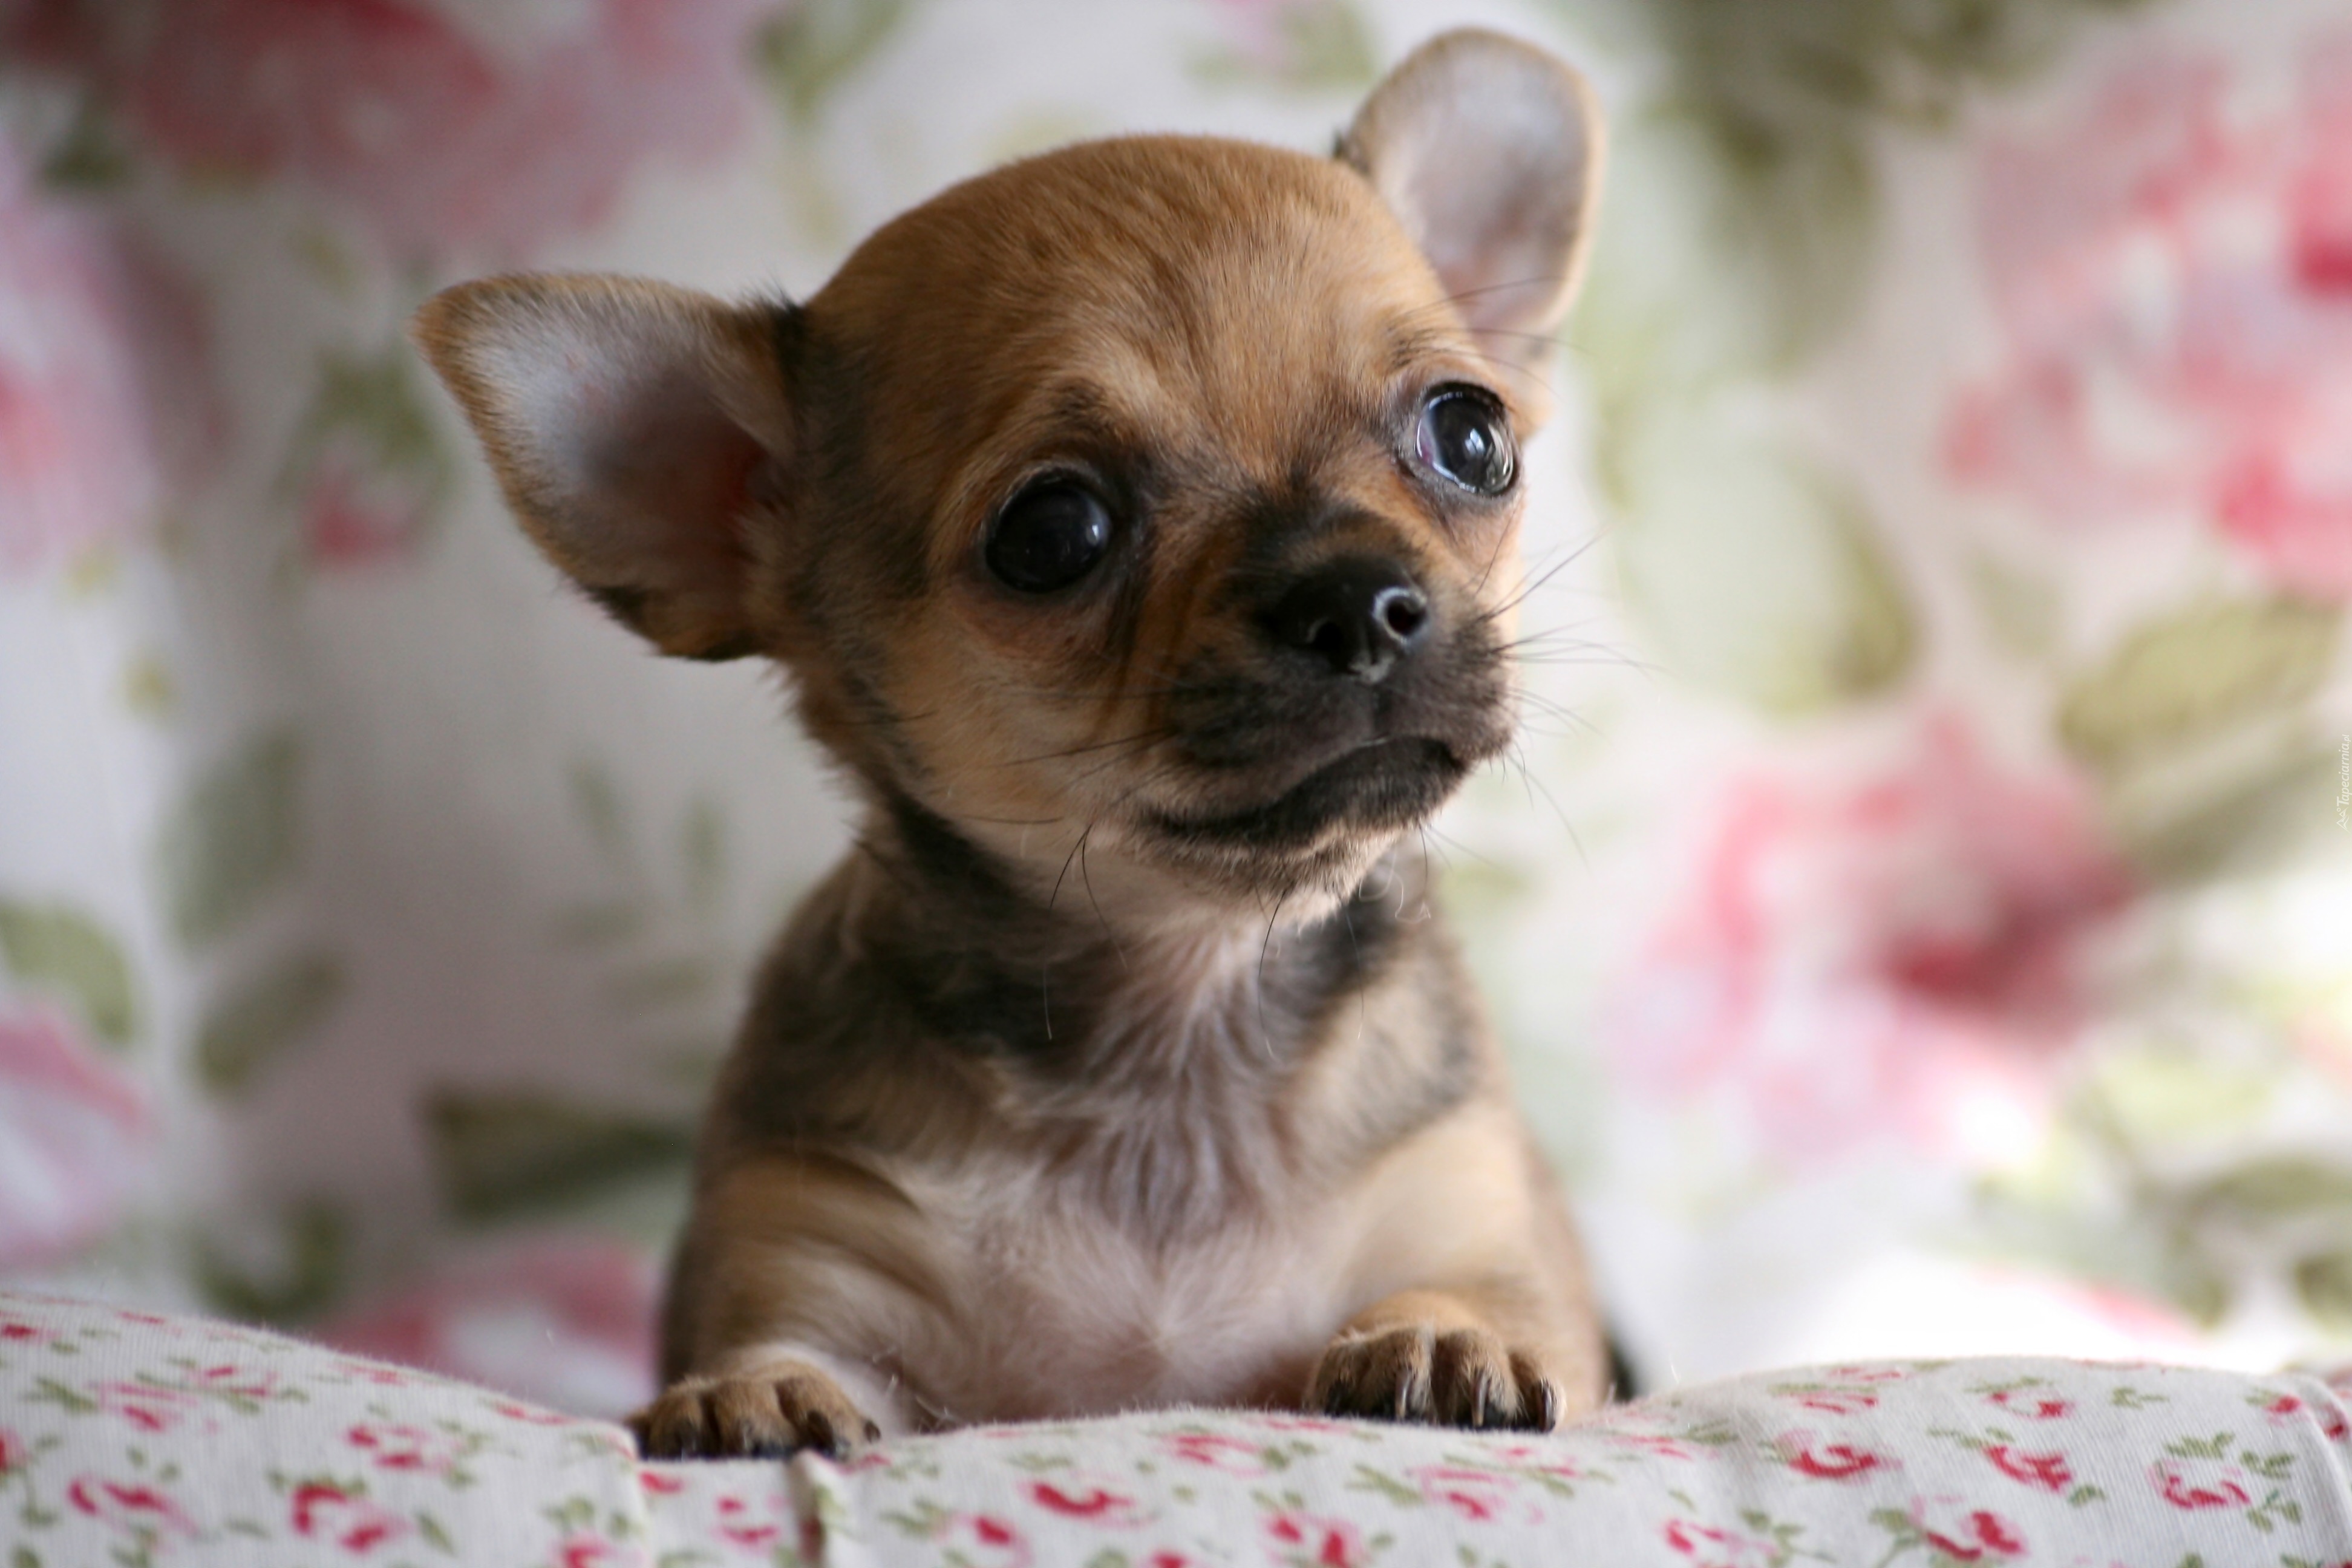 Chihuahua, Zbliżenie